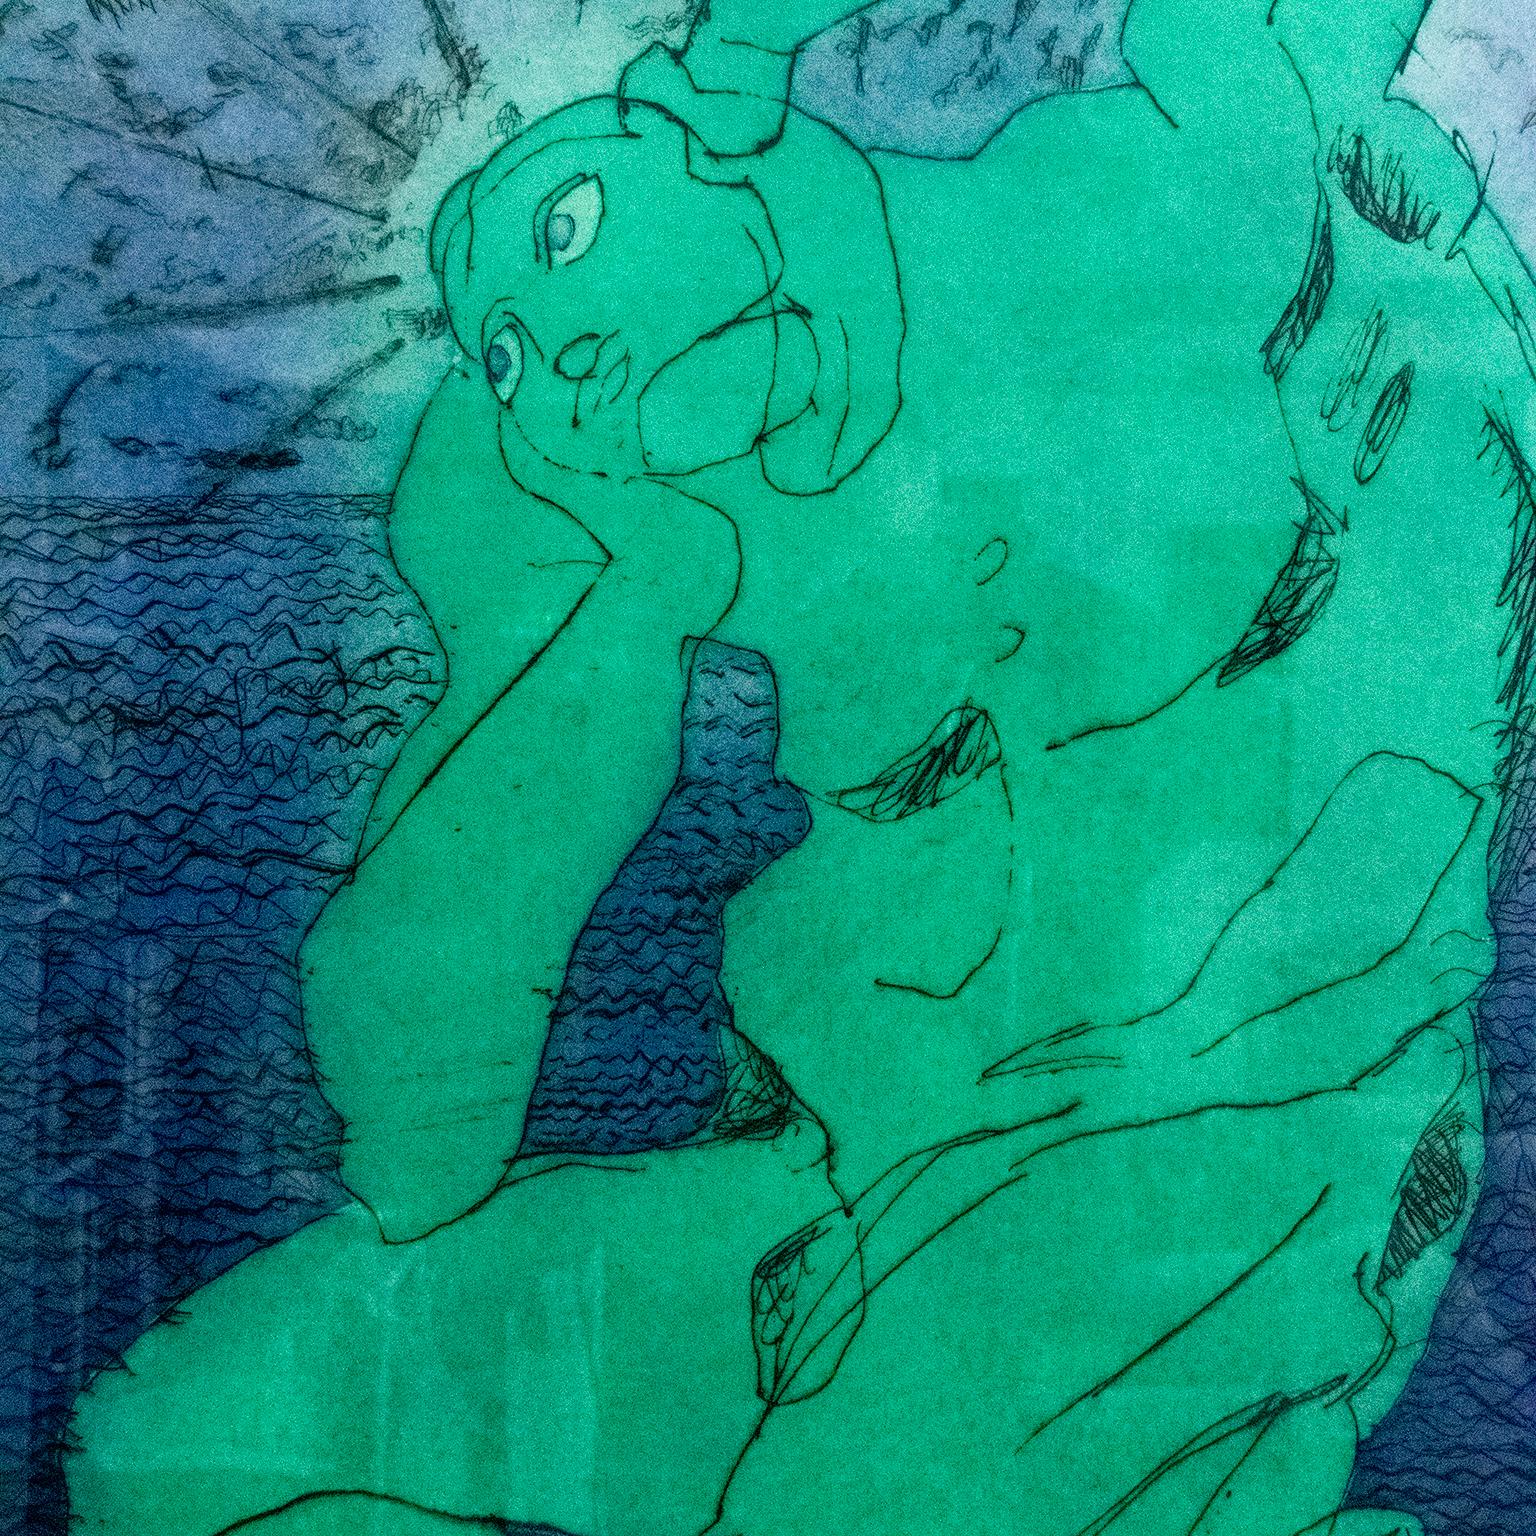 American Sandro Chia Aquatint Print in Green & Blue, 